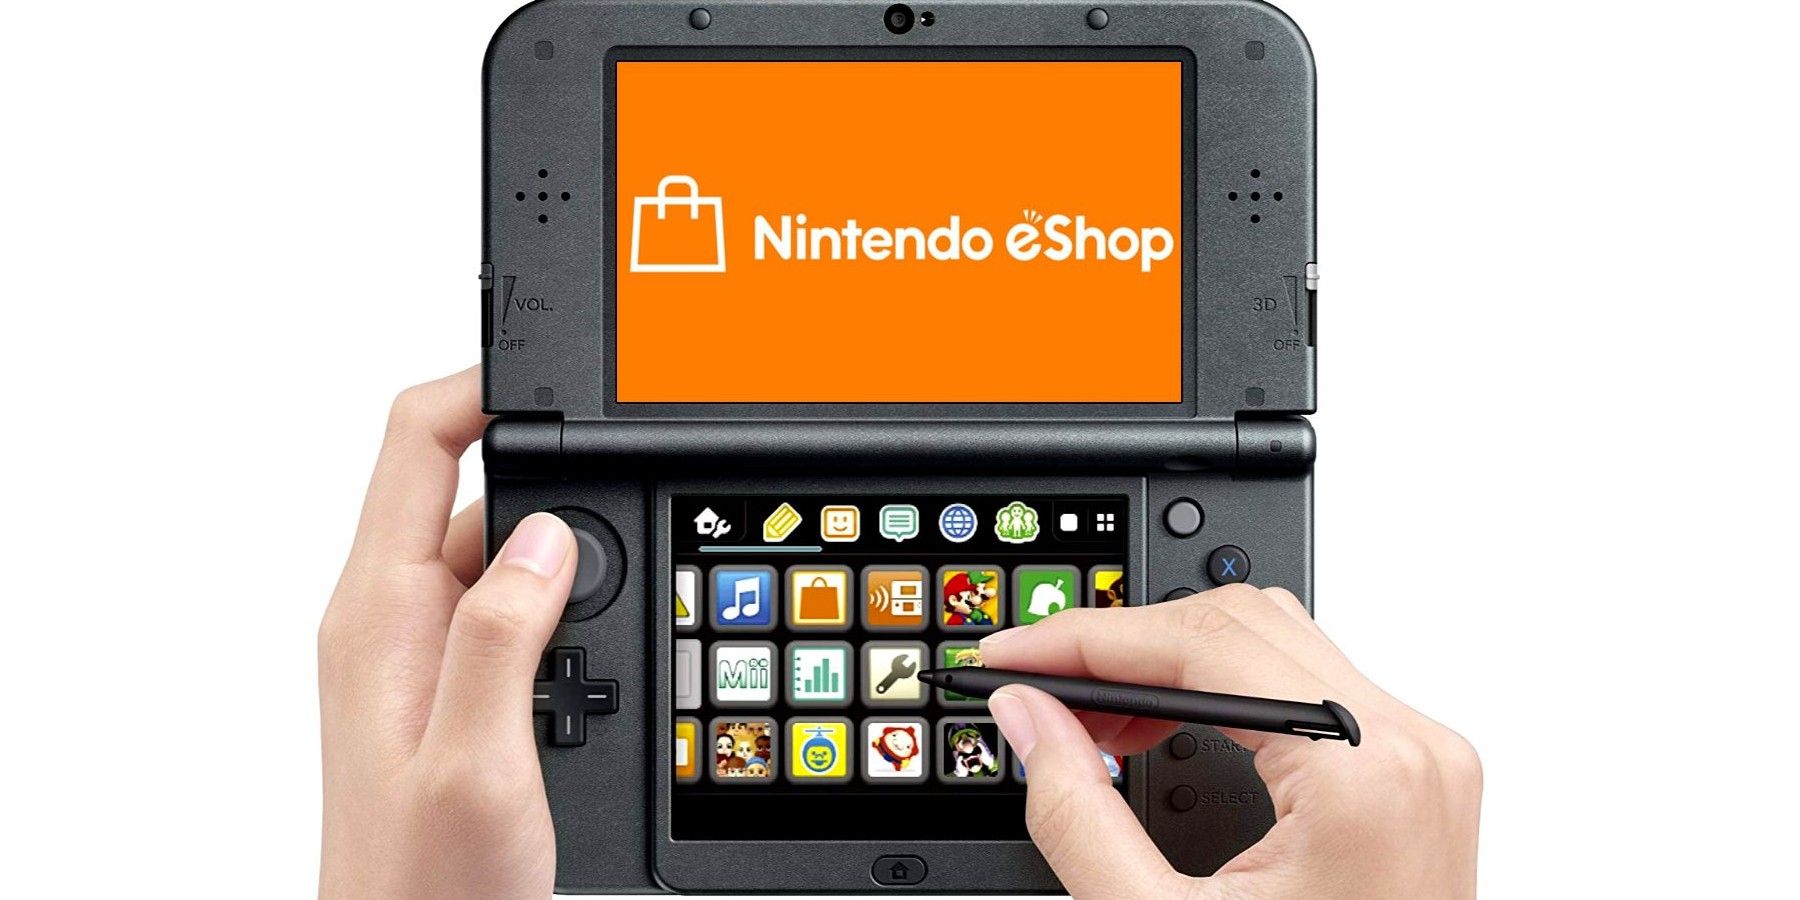 Nintendo eShop 3DS Featured